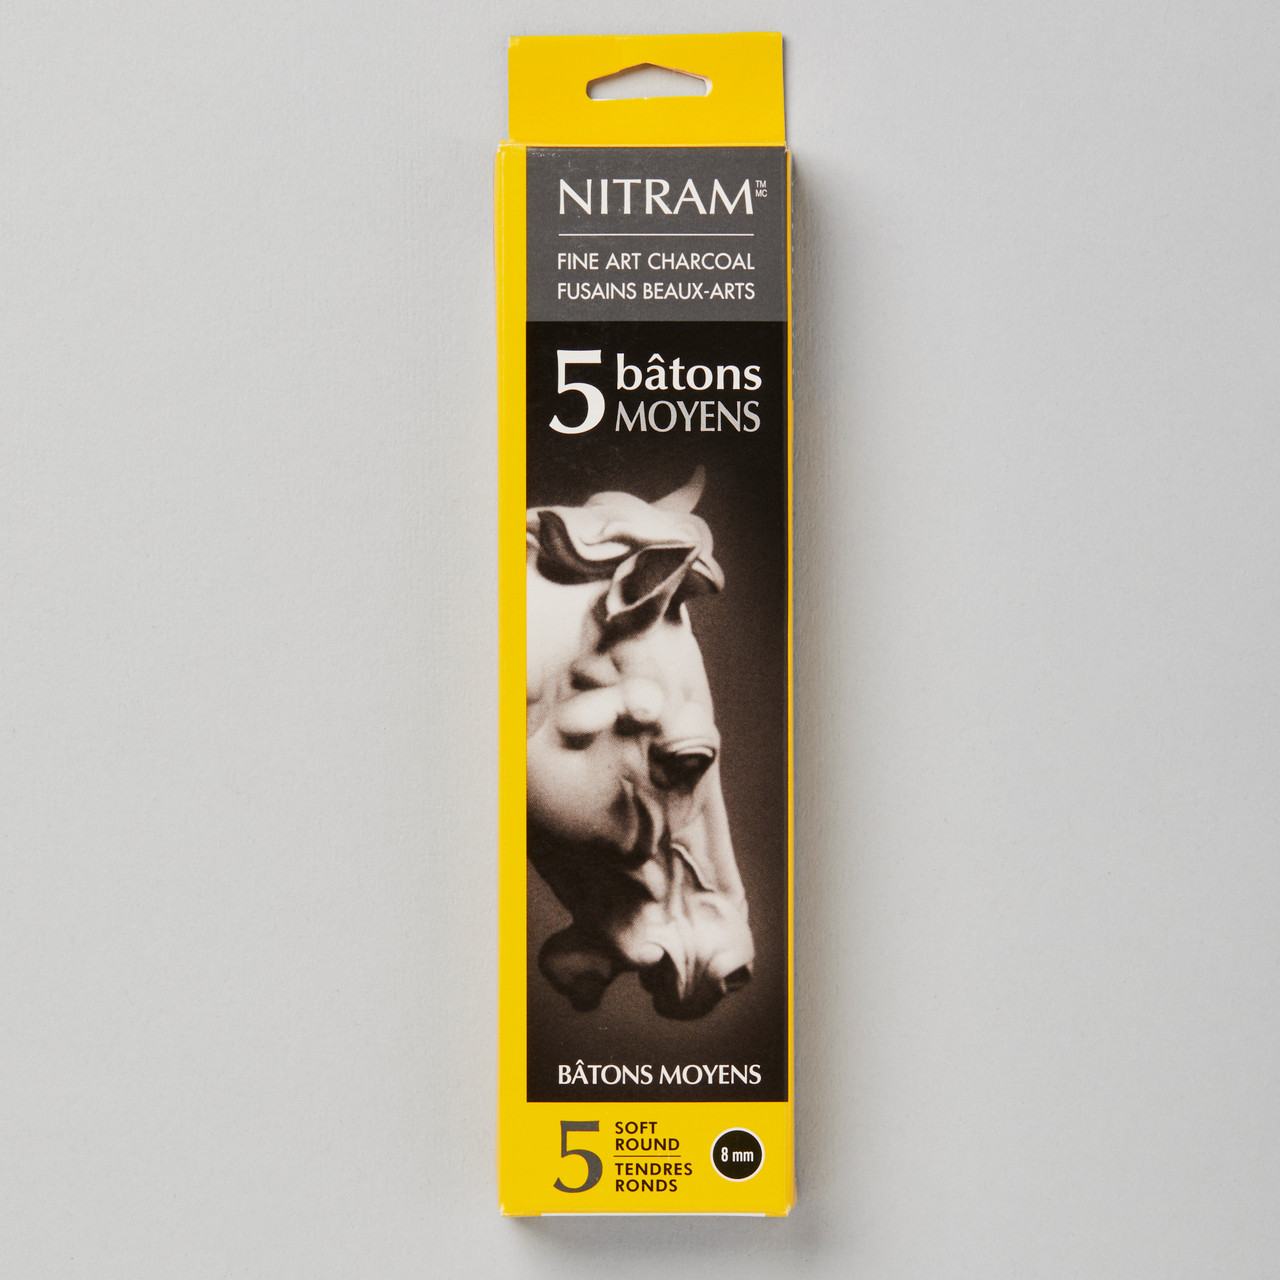 Nitram Batons Moyens Extra Soft Round 8mm Pack of 5